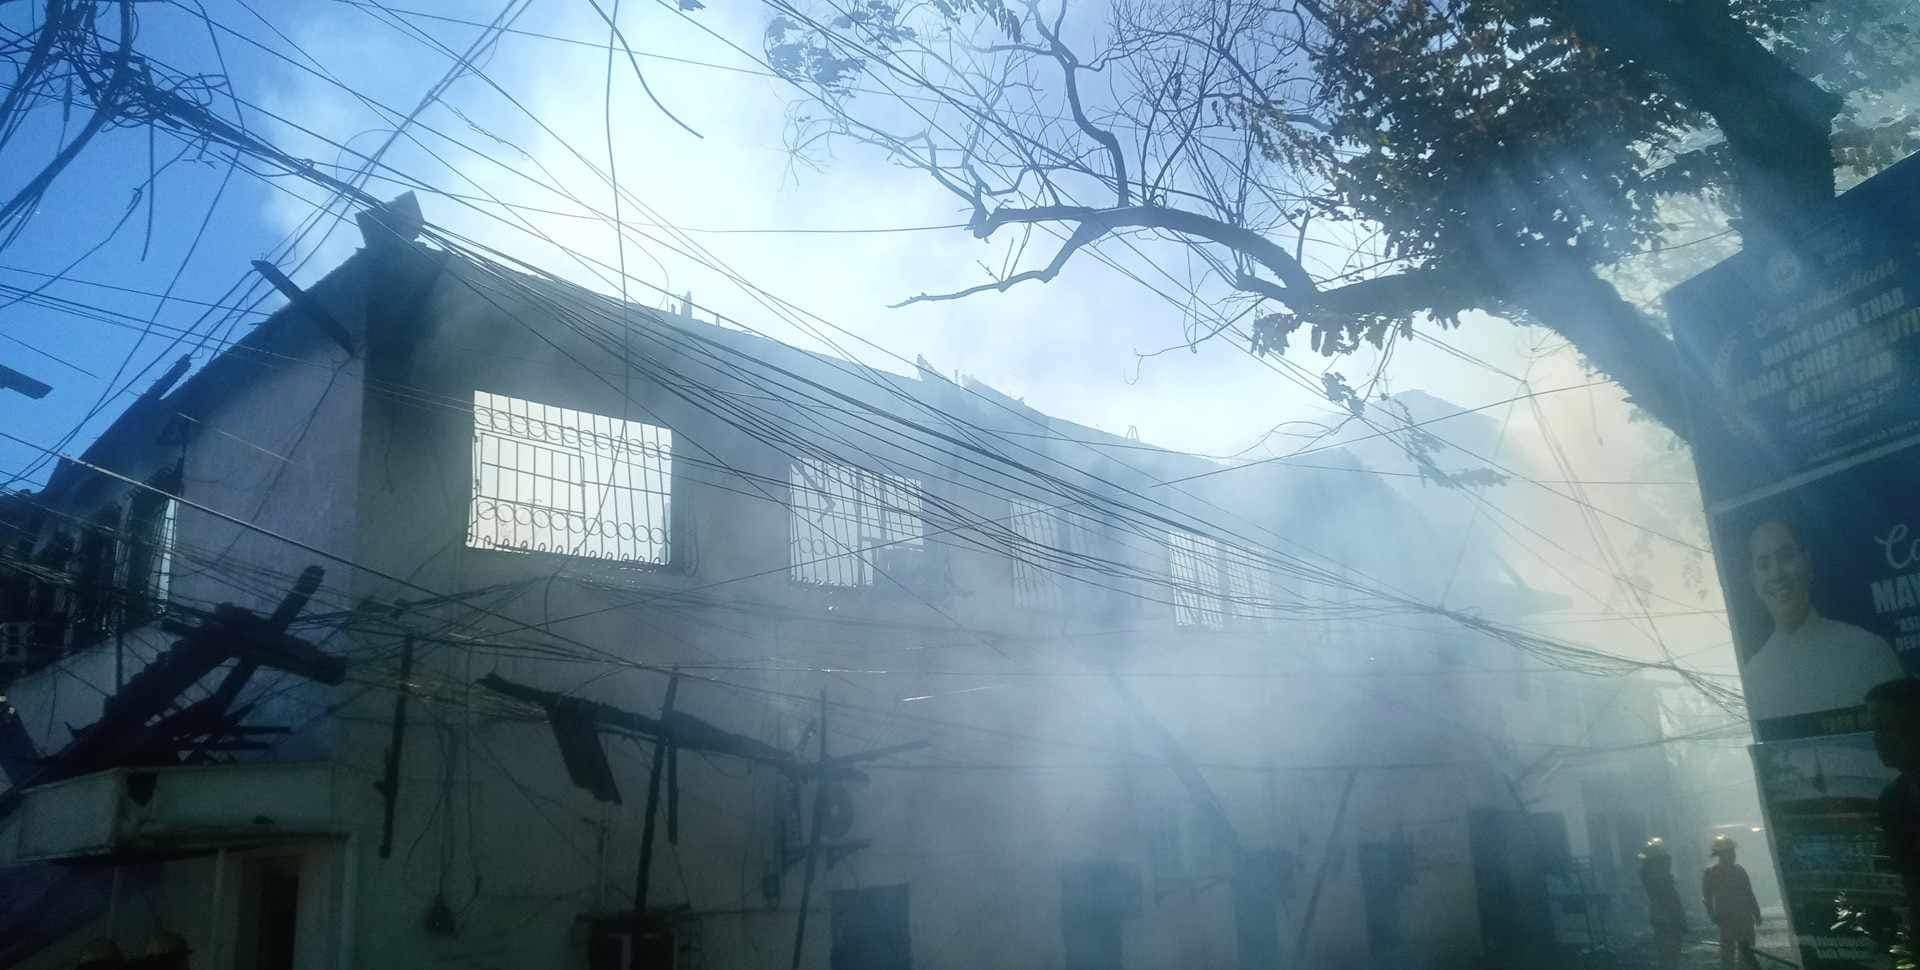 A fire hit the Municipal Trial Court of Minglanilla, Cebu on Tuesday, the Bureau of Fire Protection (BFP) said.